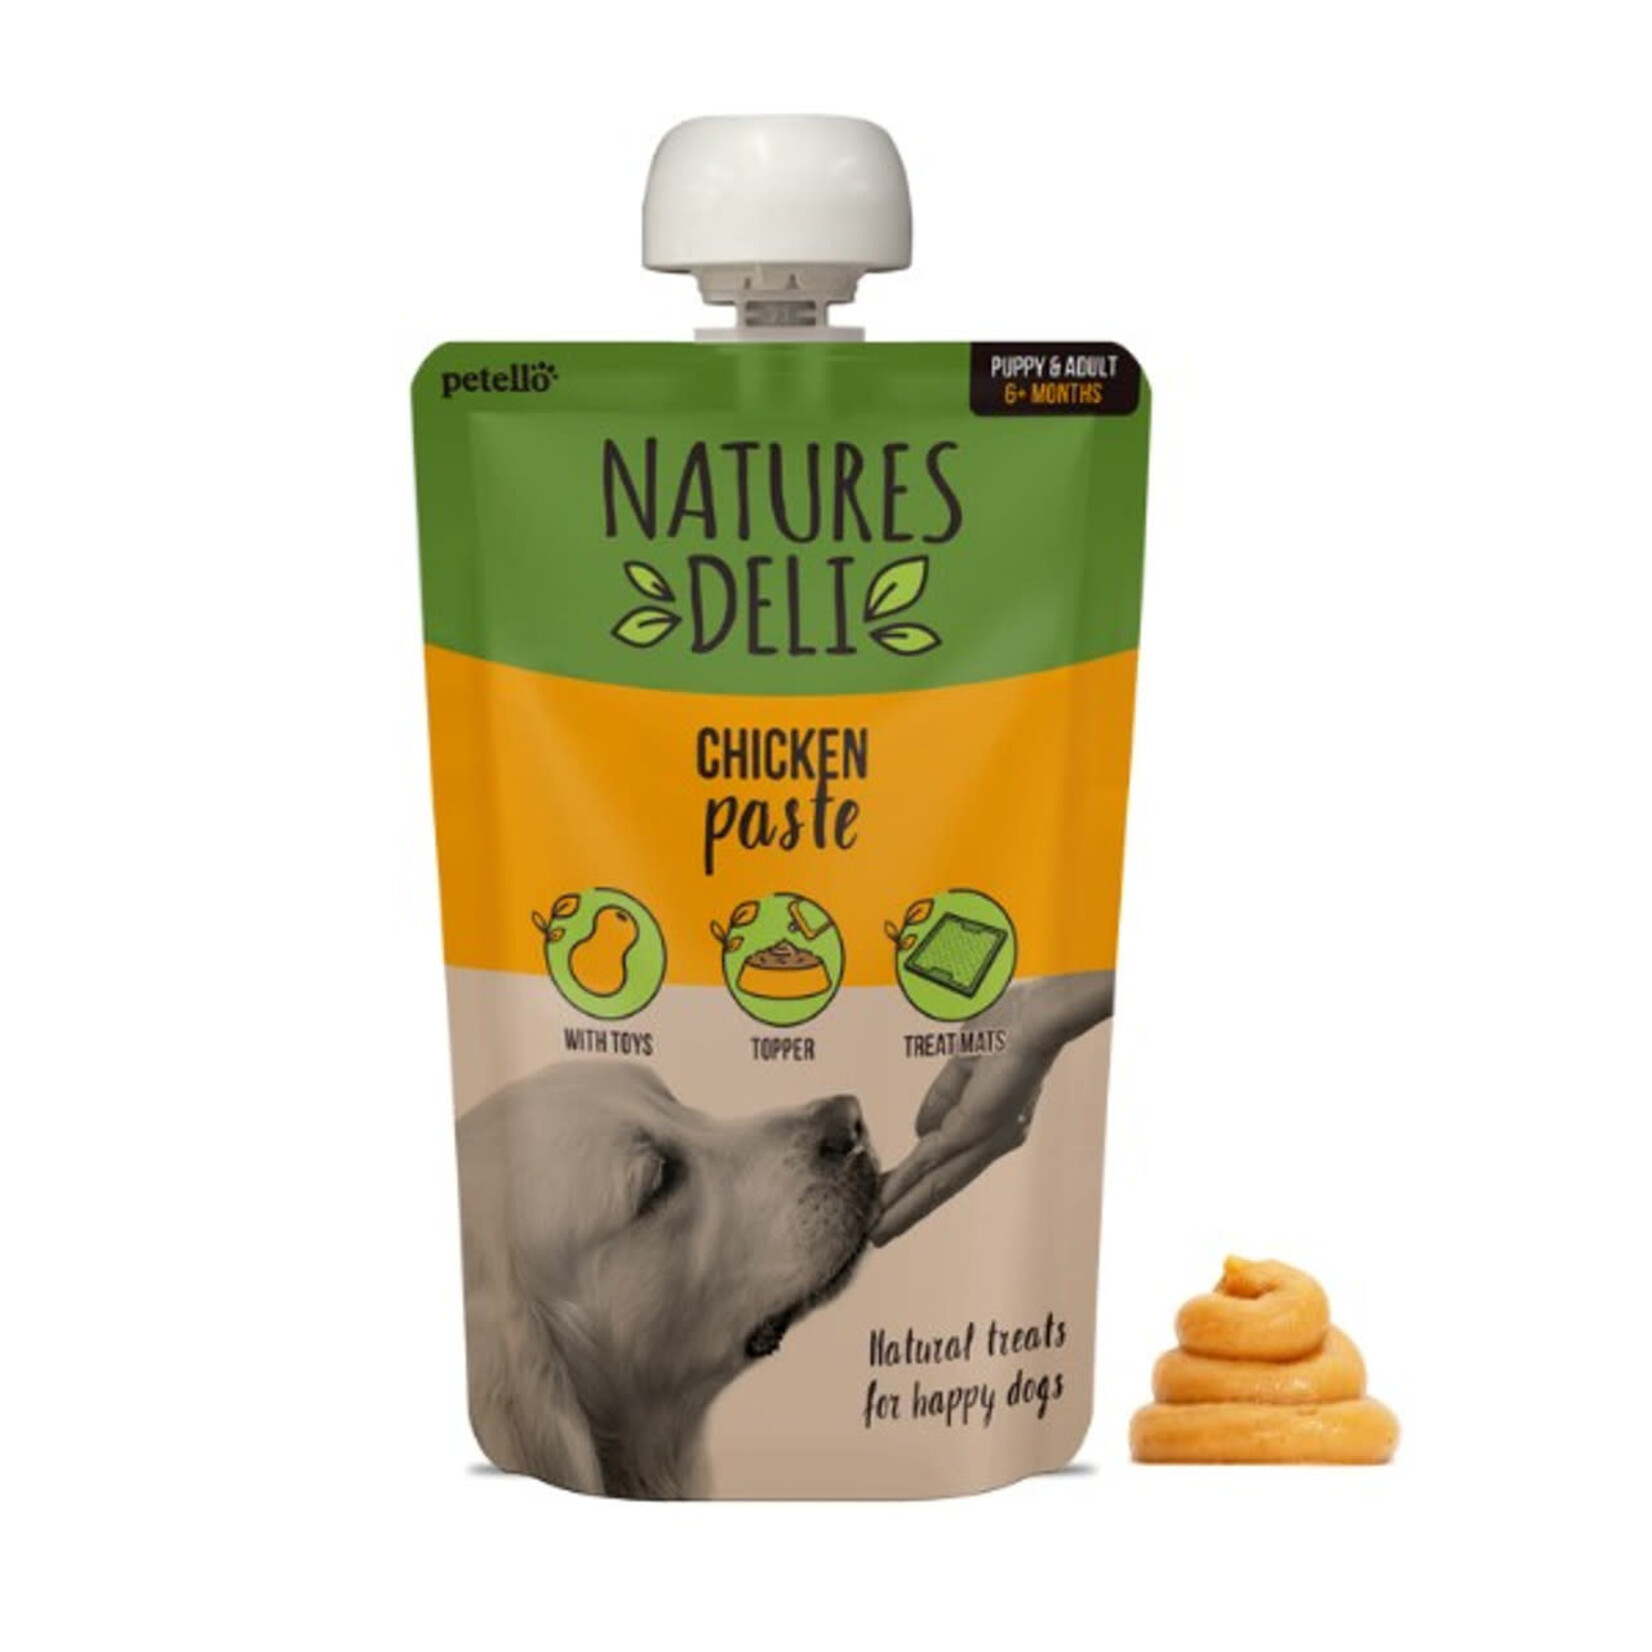 petello Natures Deli Grain Free Paste Dog Treat, 100g